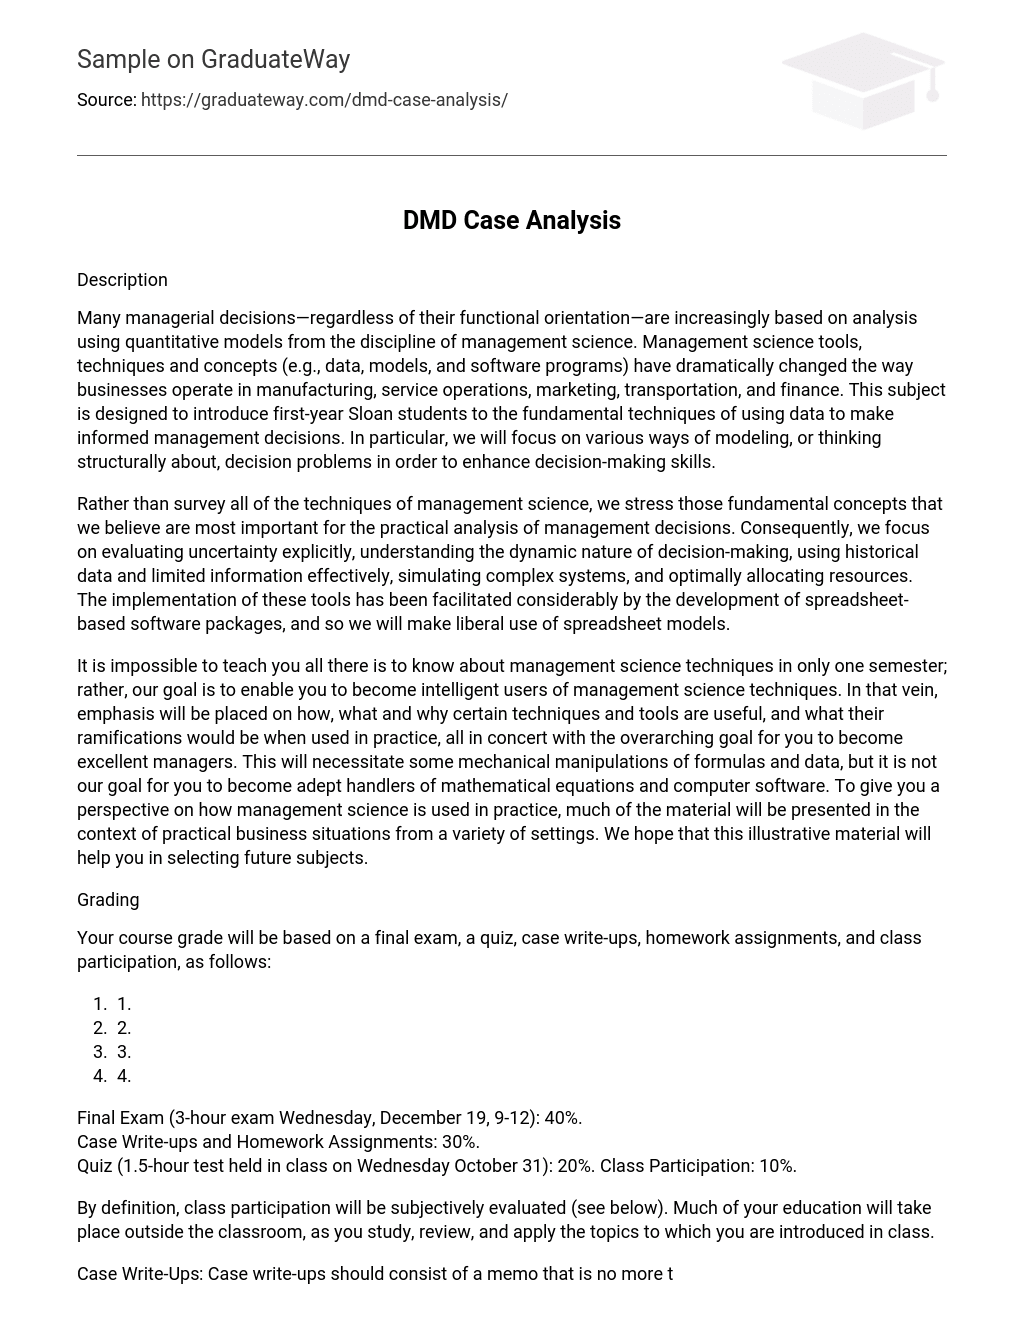 DMD Case Analysis